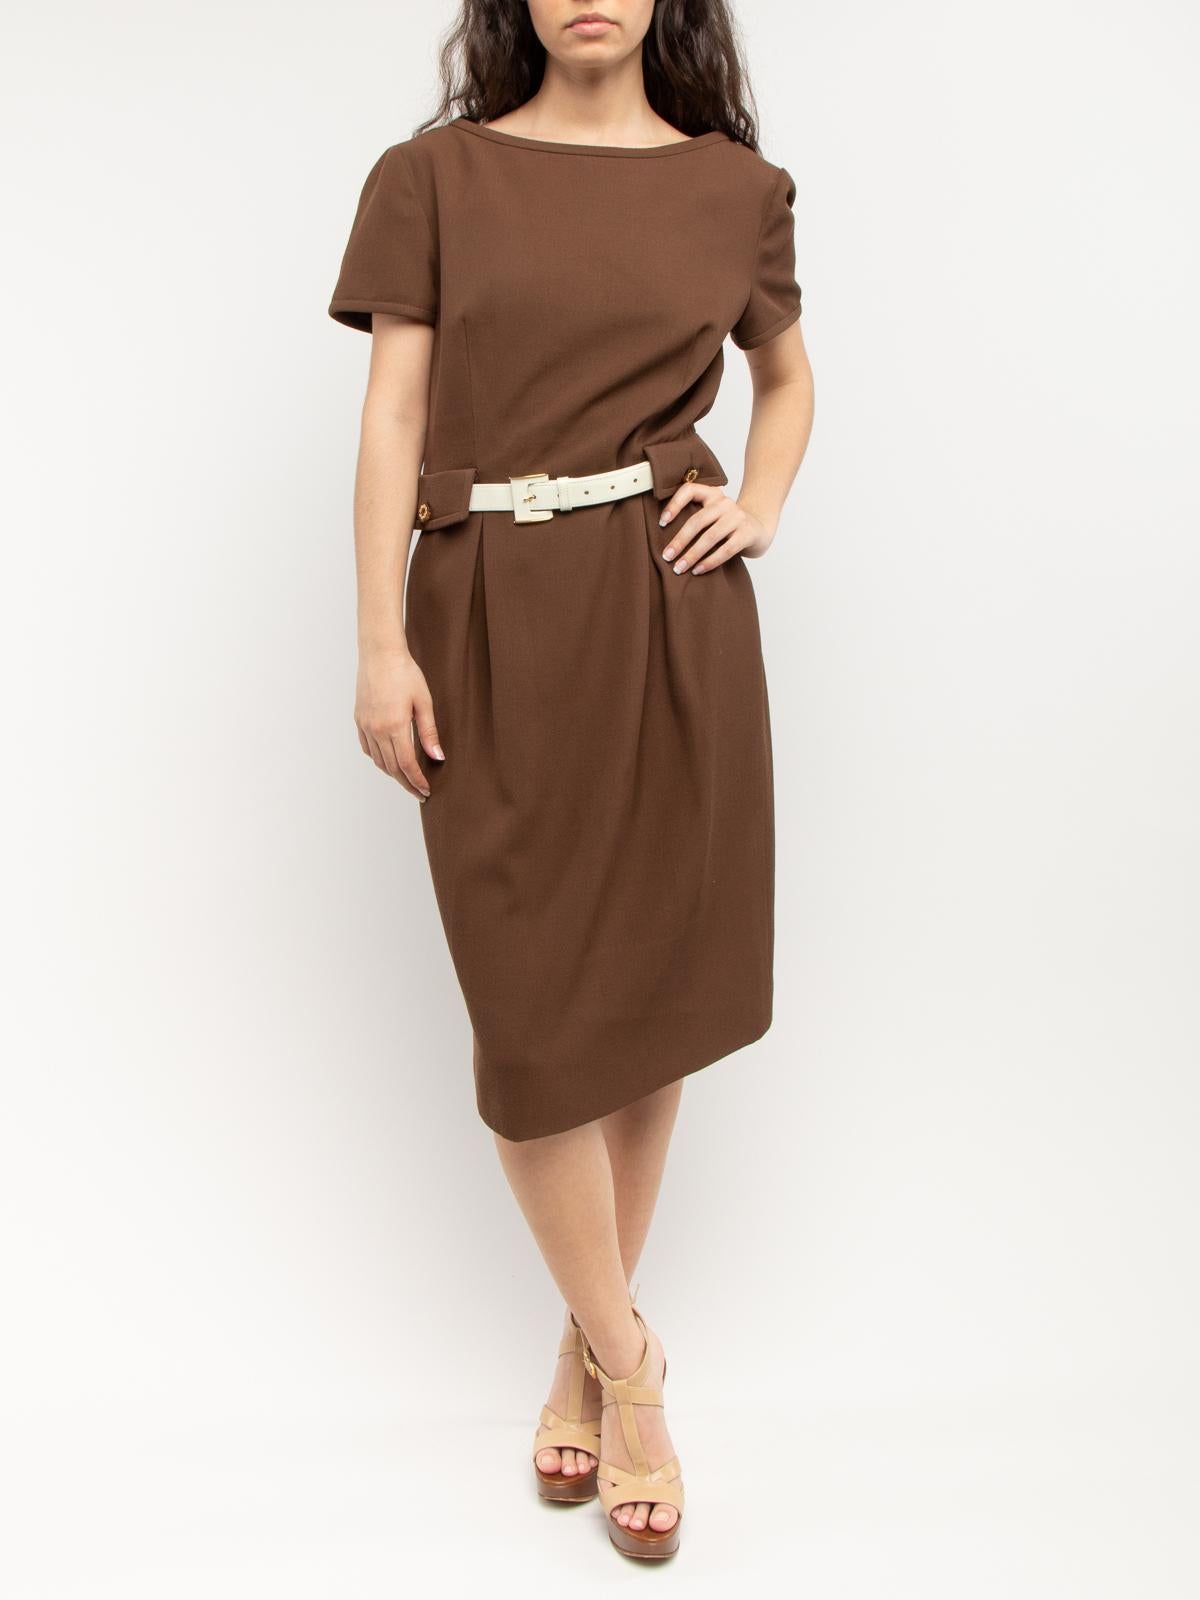 Pre-Loved Valentino Garavani Women's Chocolate Brown Vintage Belted Dress 1